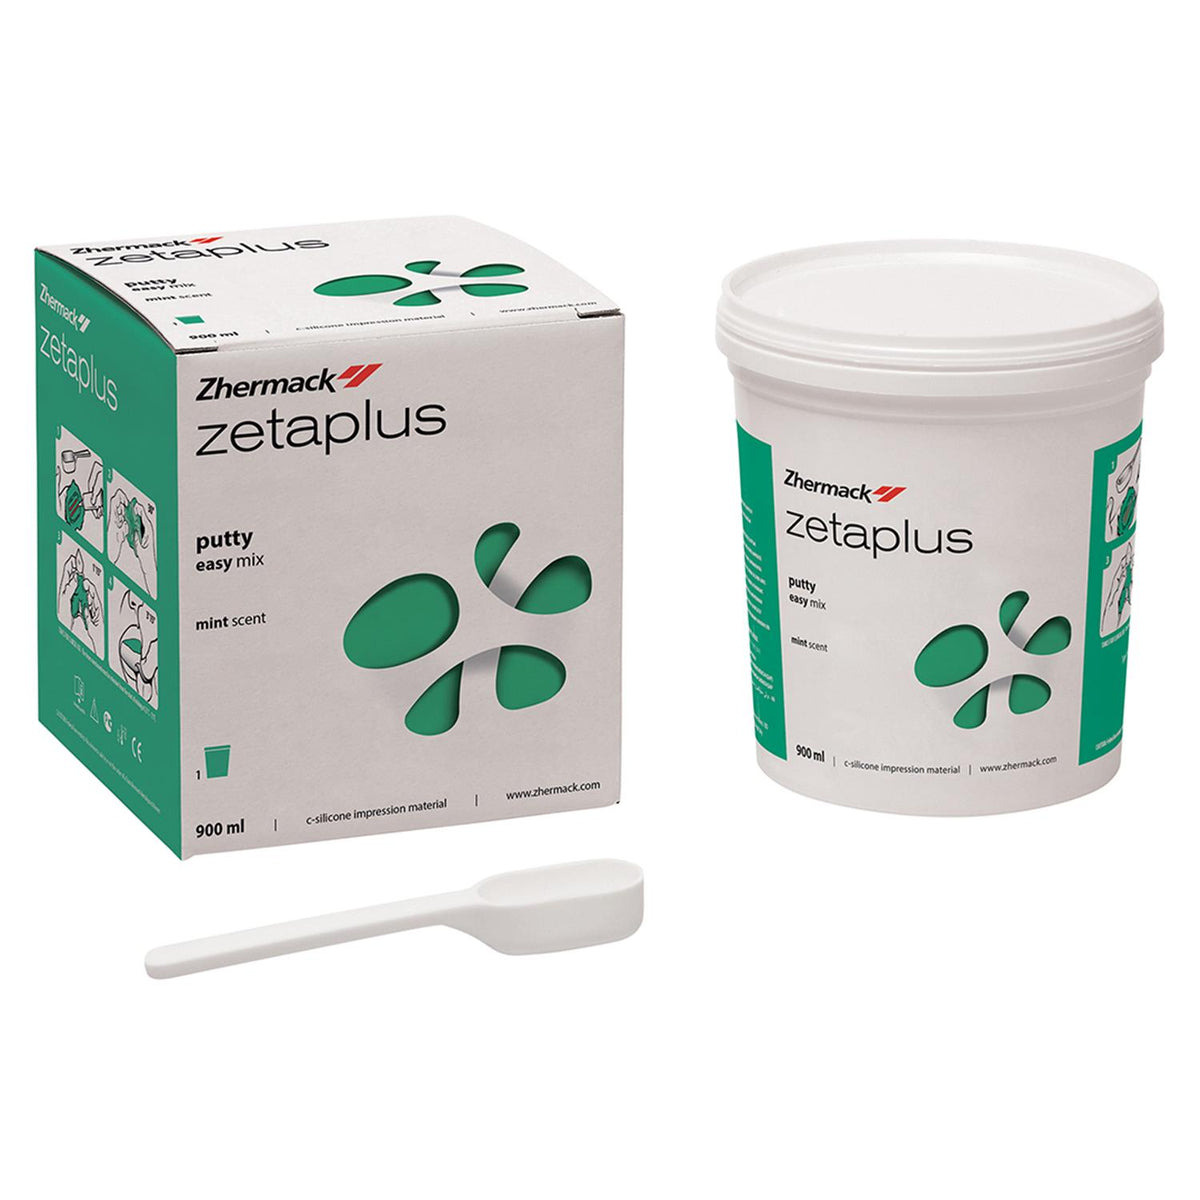 DentrealStore - Zhermack Zetaplus Putty Impression Material 900 ml